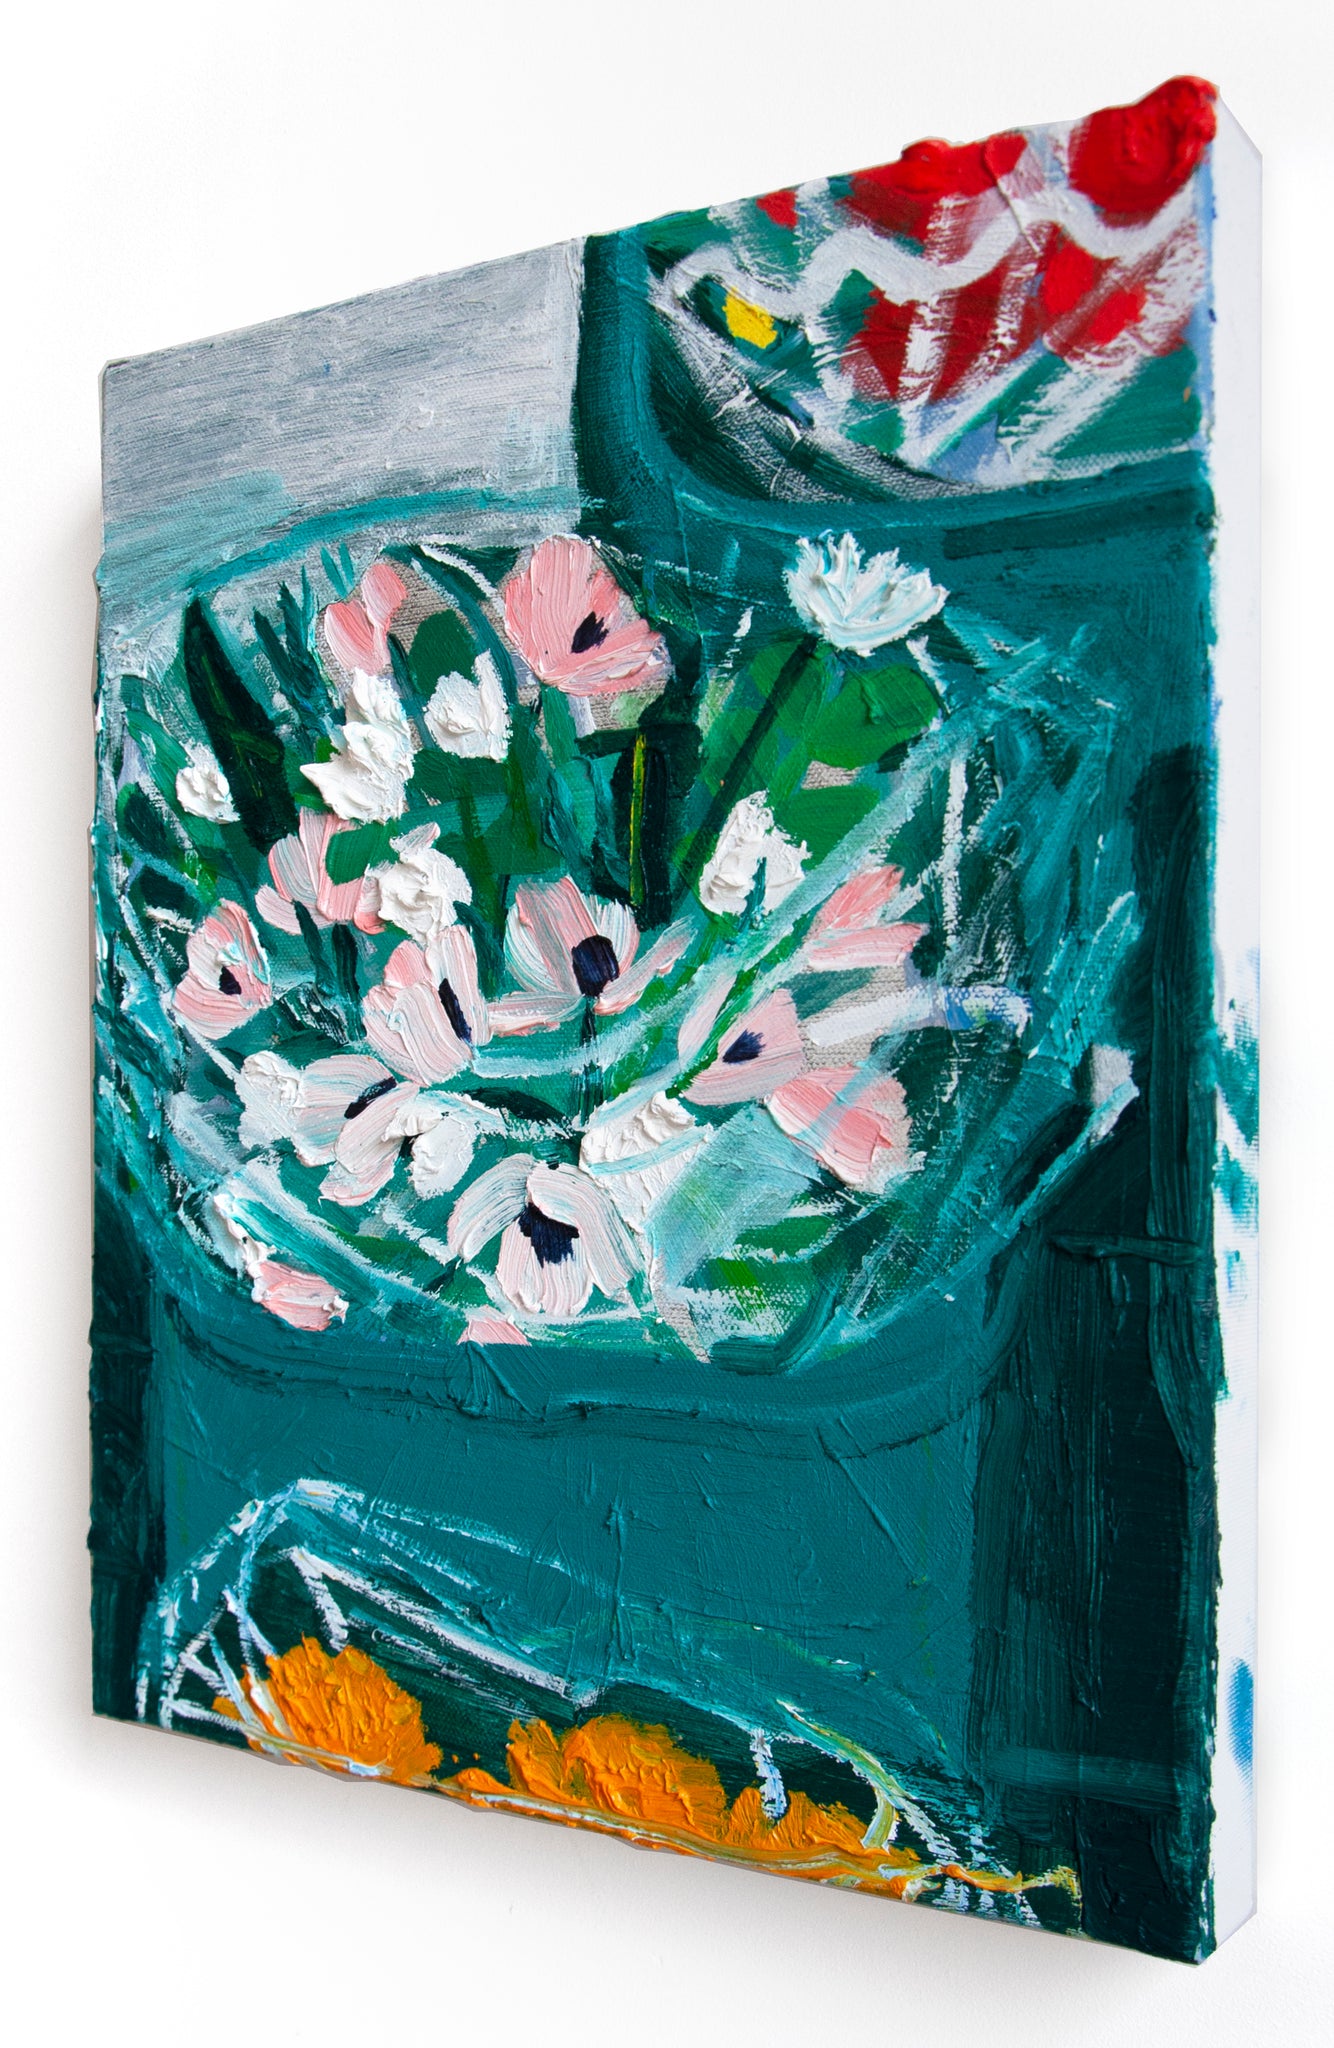 Bodega Flowers (Anemones), 2020